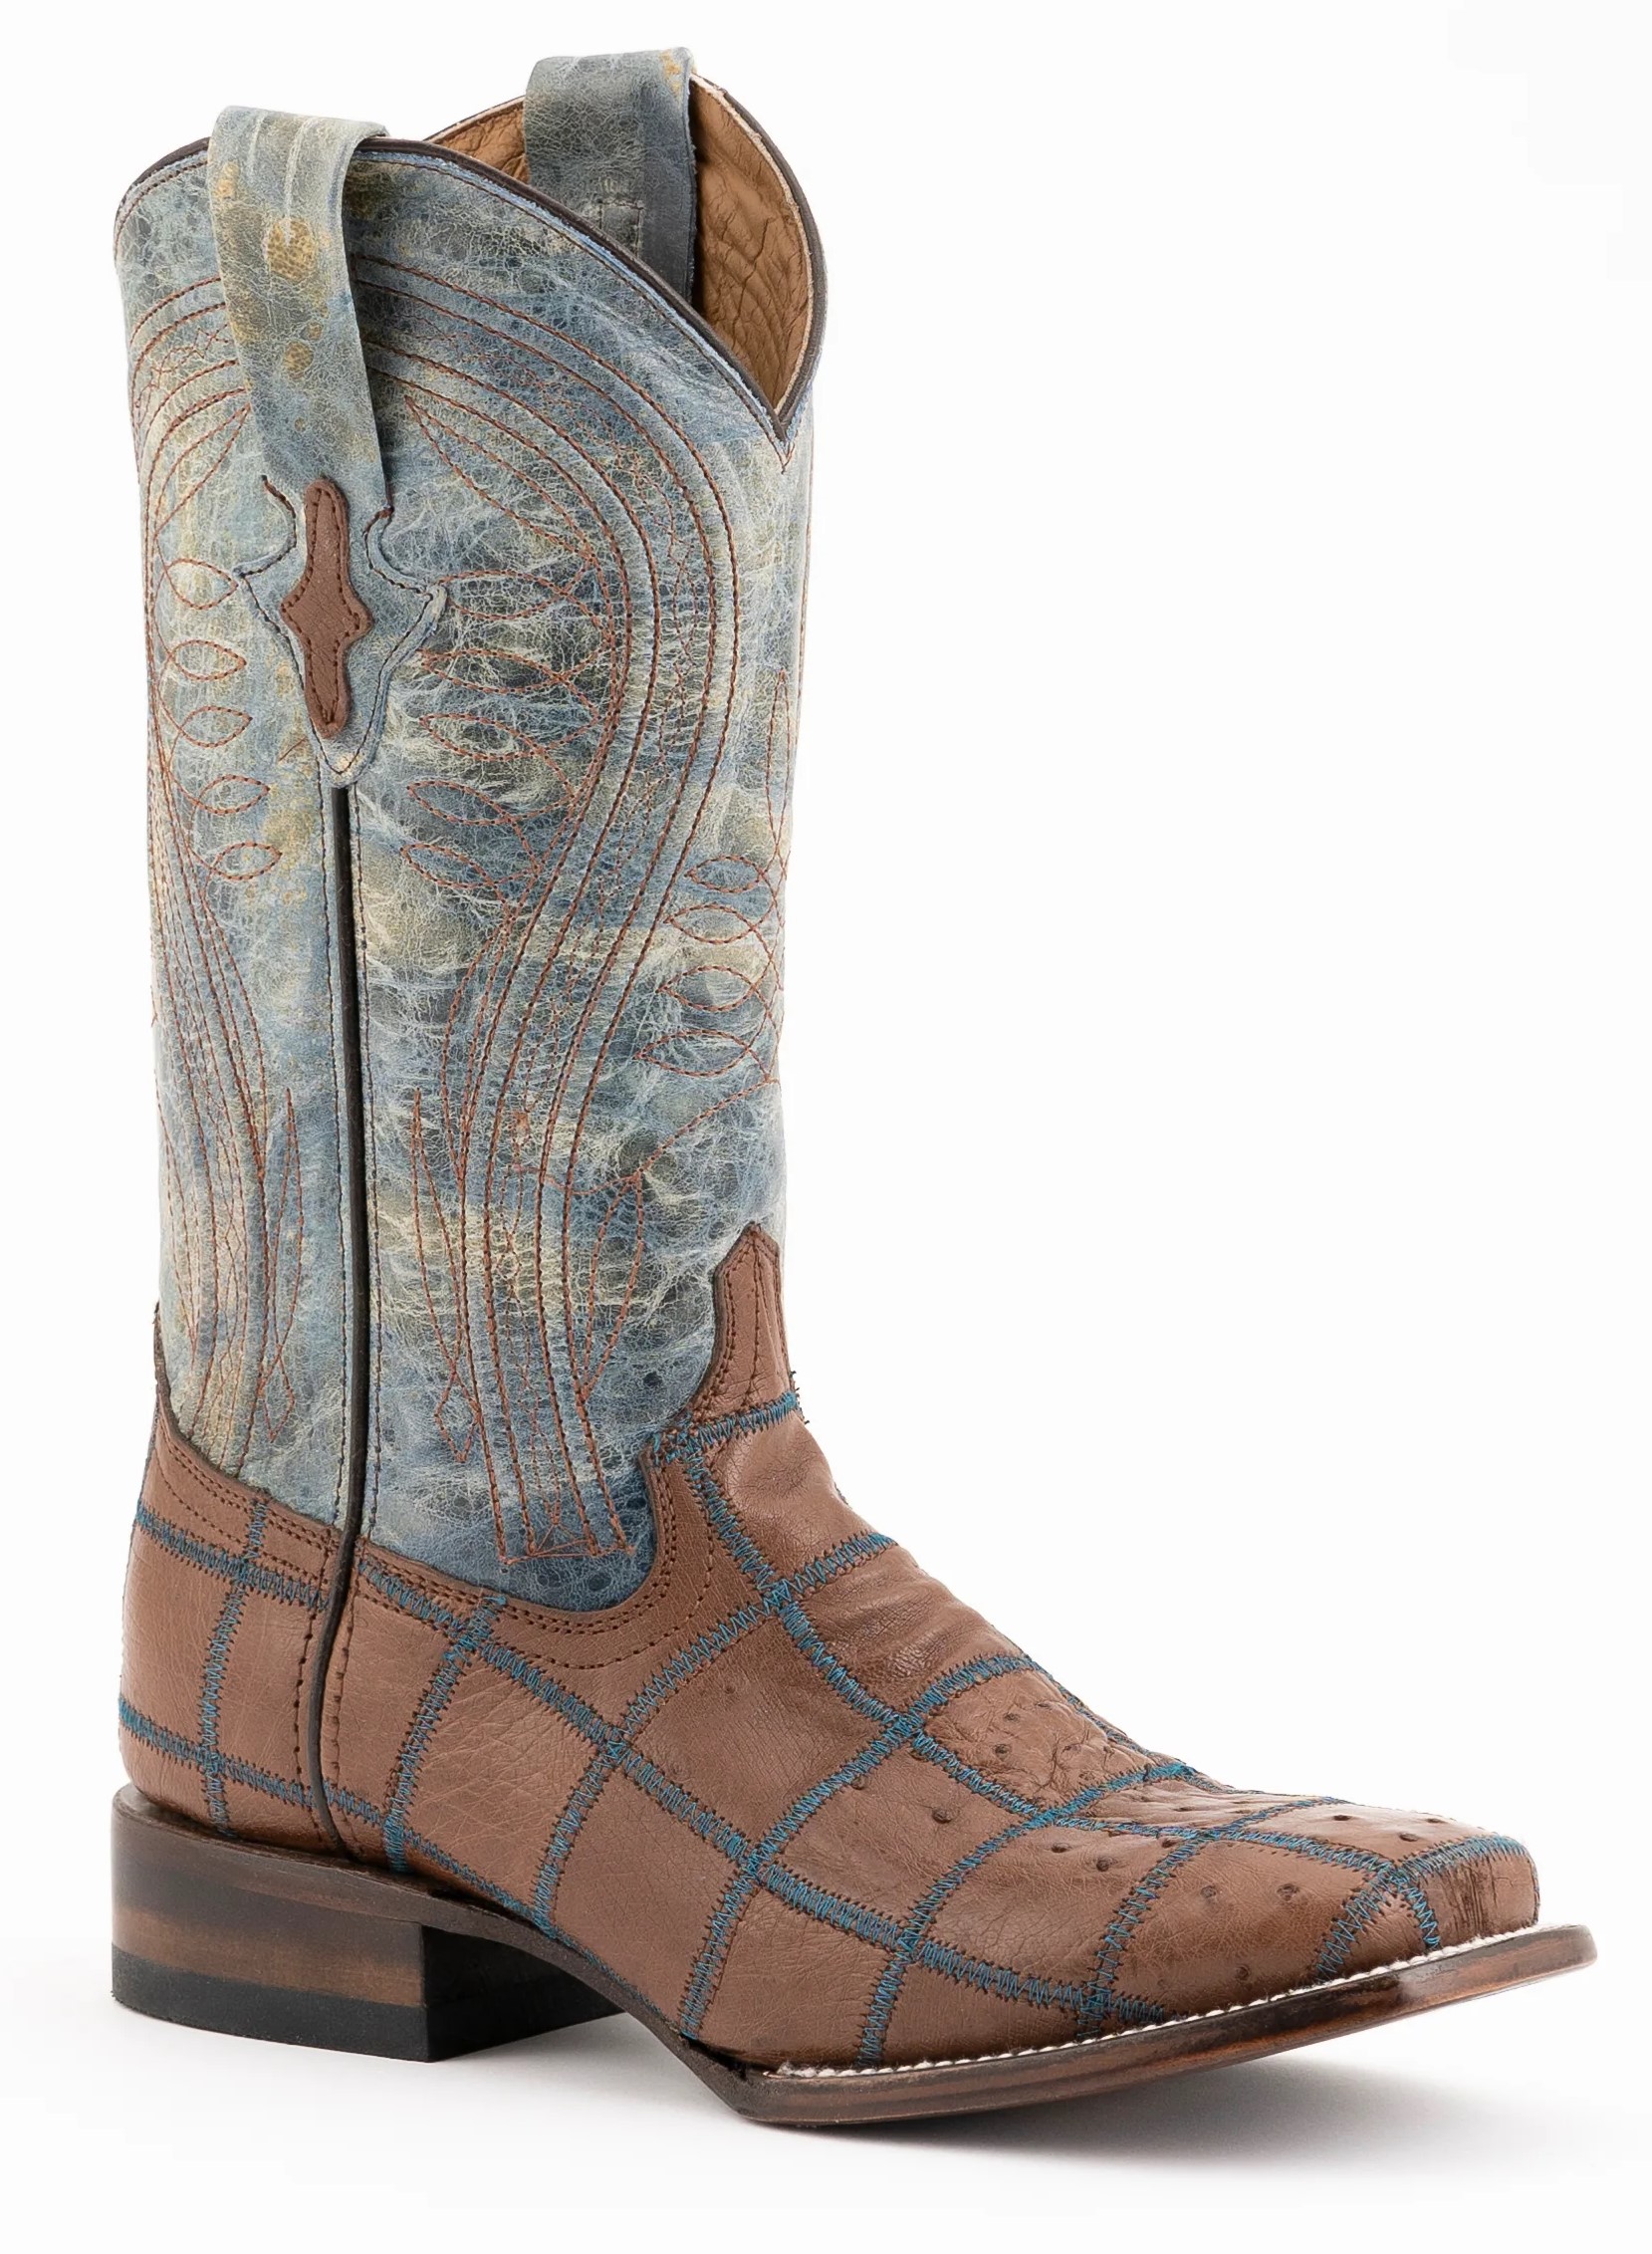 Ferrini "Pinto" Kango Genuine Ostrich Patch Square Toe Cowboy Boots 11693-07